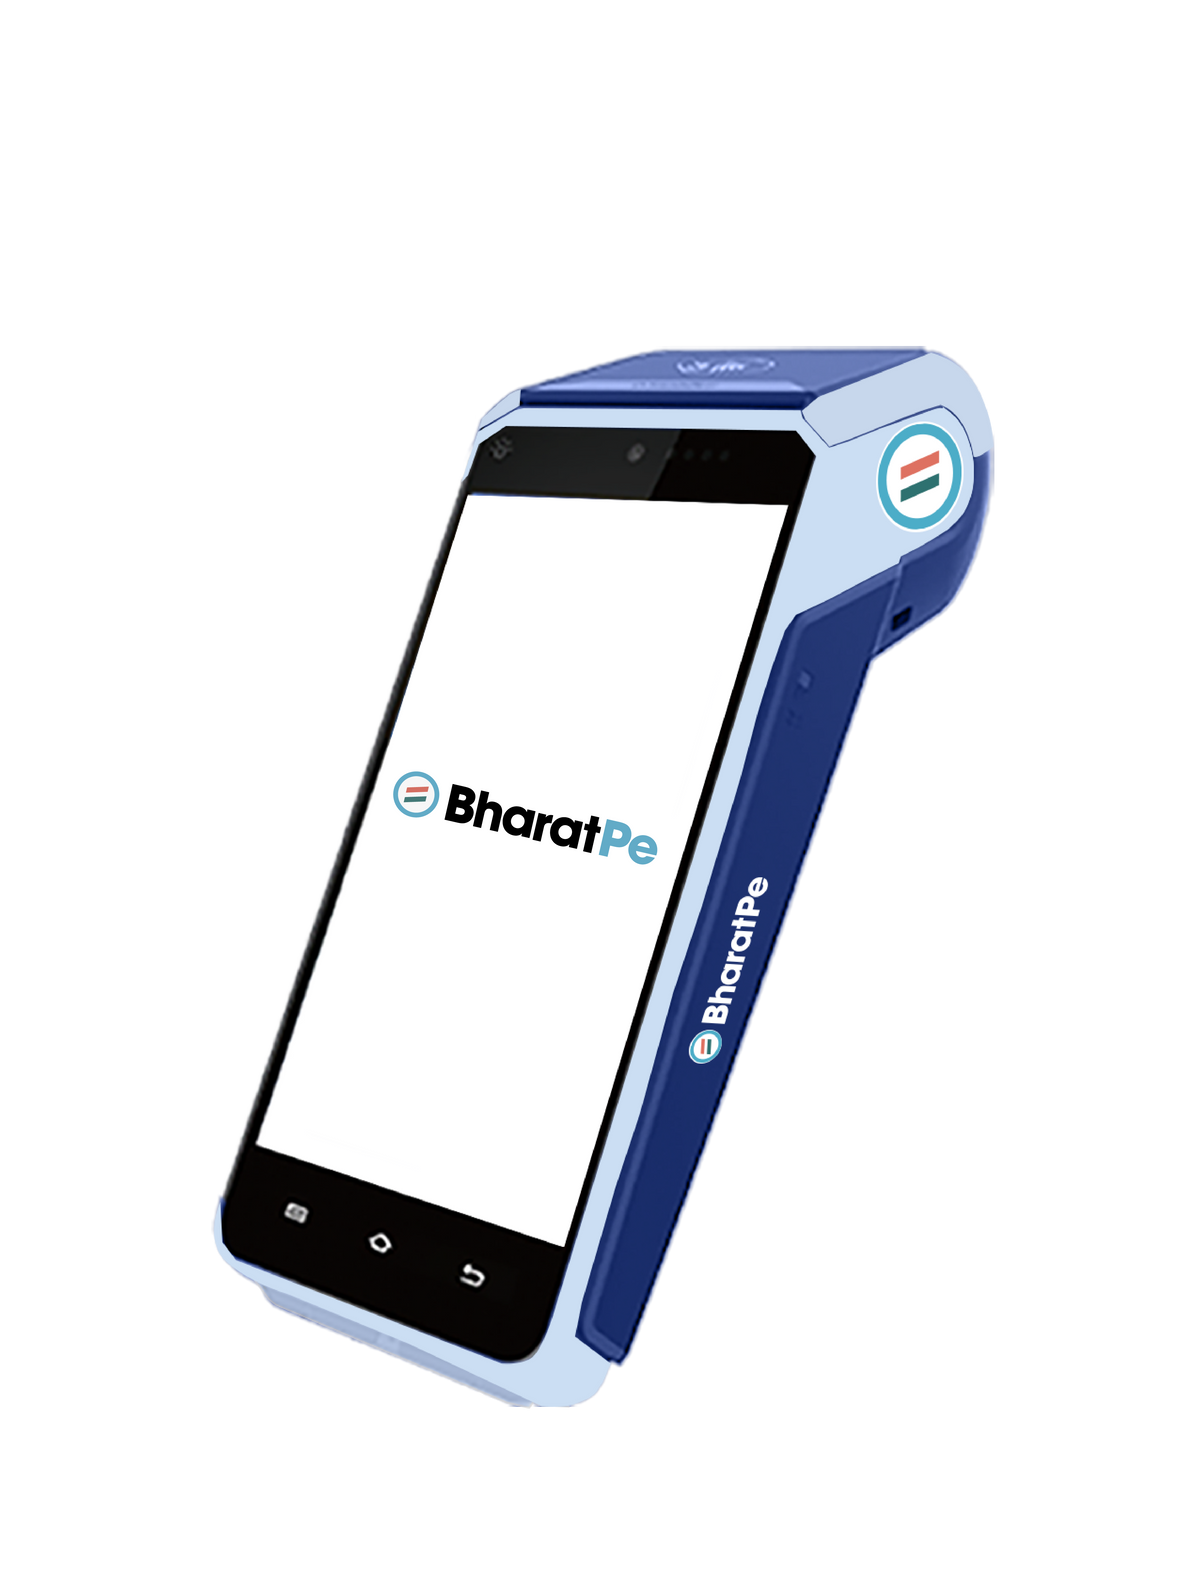 BharatPe launches BharatPe Swipe Android machine for merchants